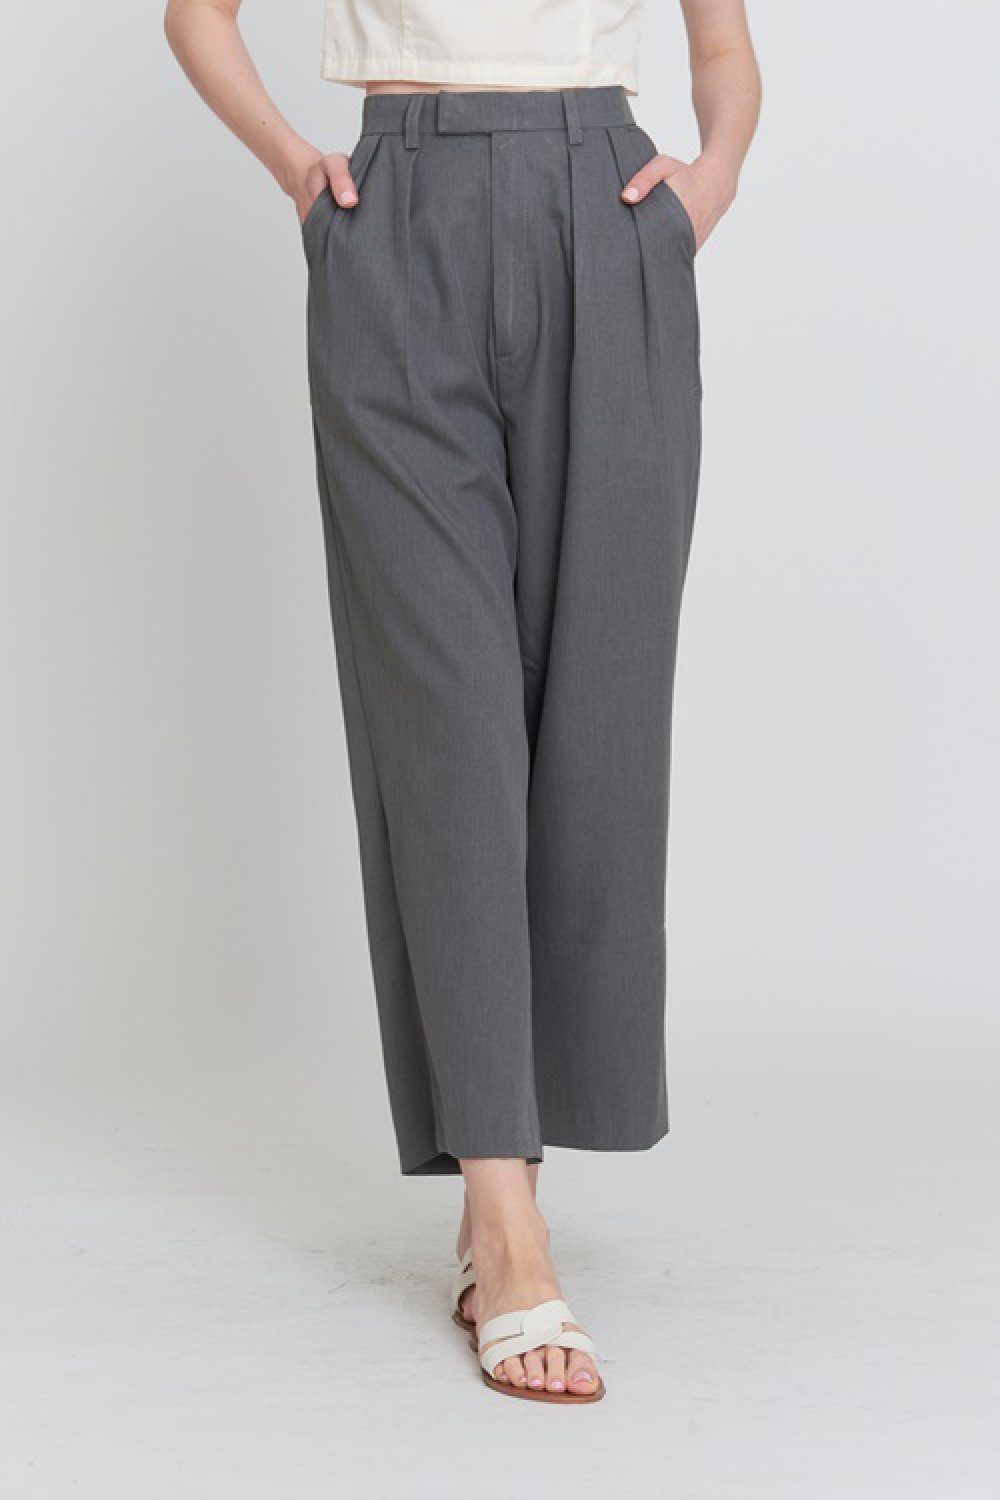 TRES FASHION | CLOTHES : HOME LONG PANTS LIGHT GREY